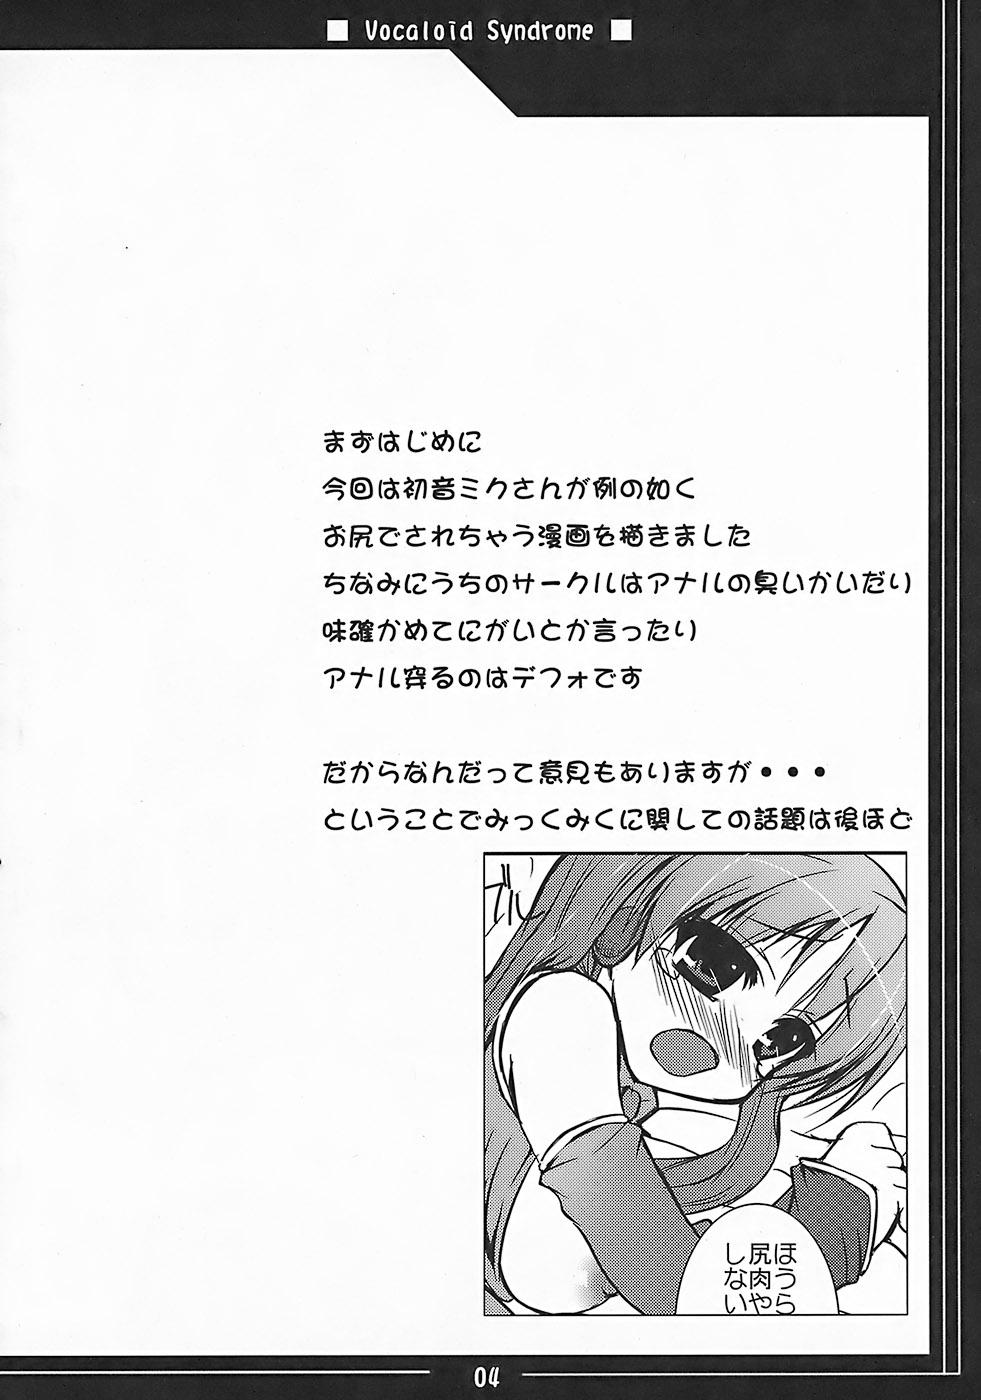 Smoking Vocaloid Shoukougun - Vocaloid Lezbi - Page 3